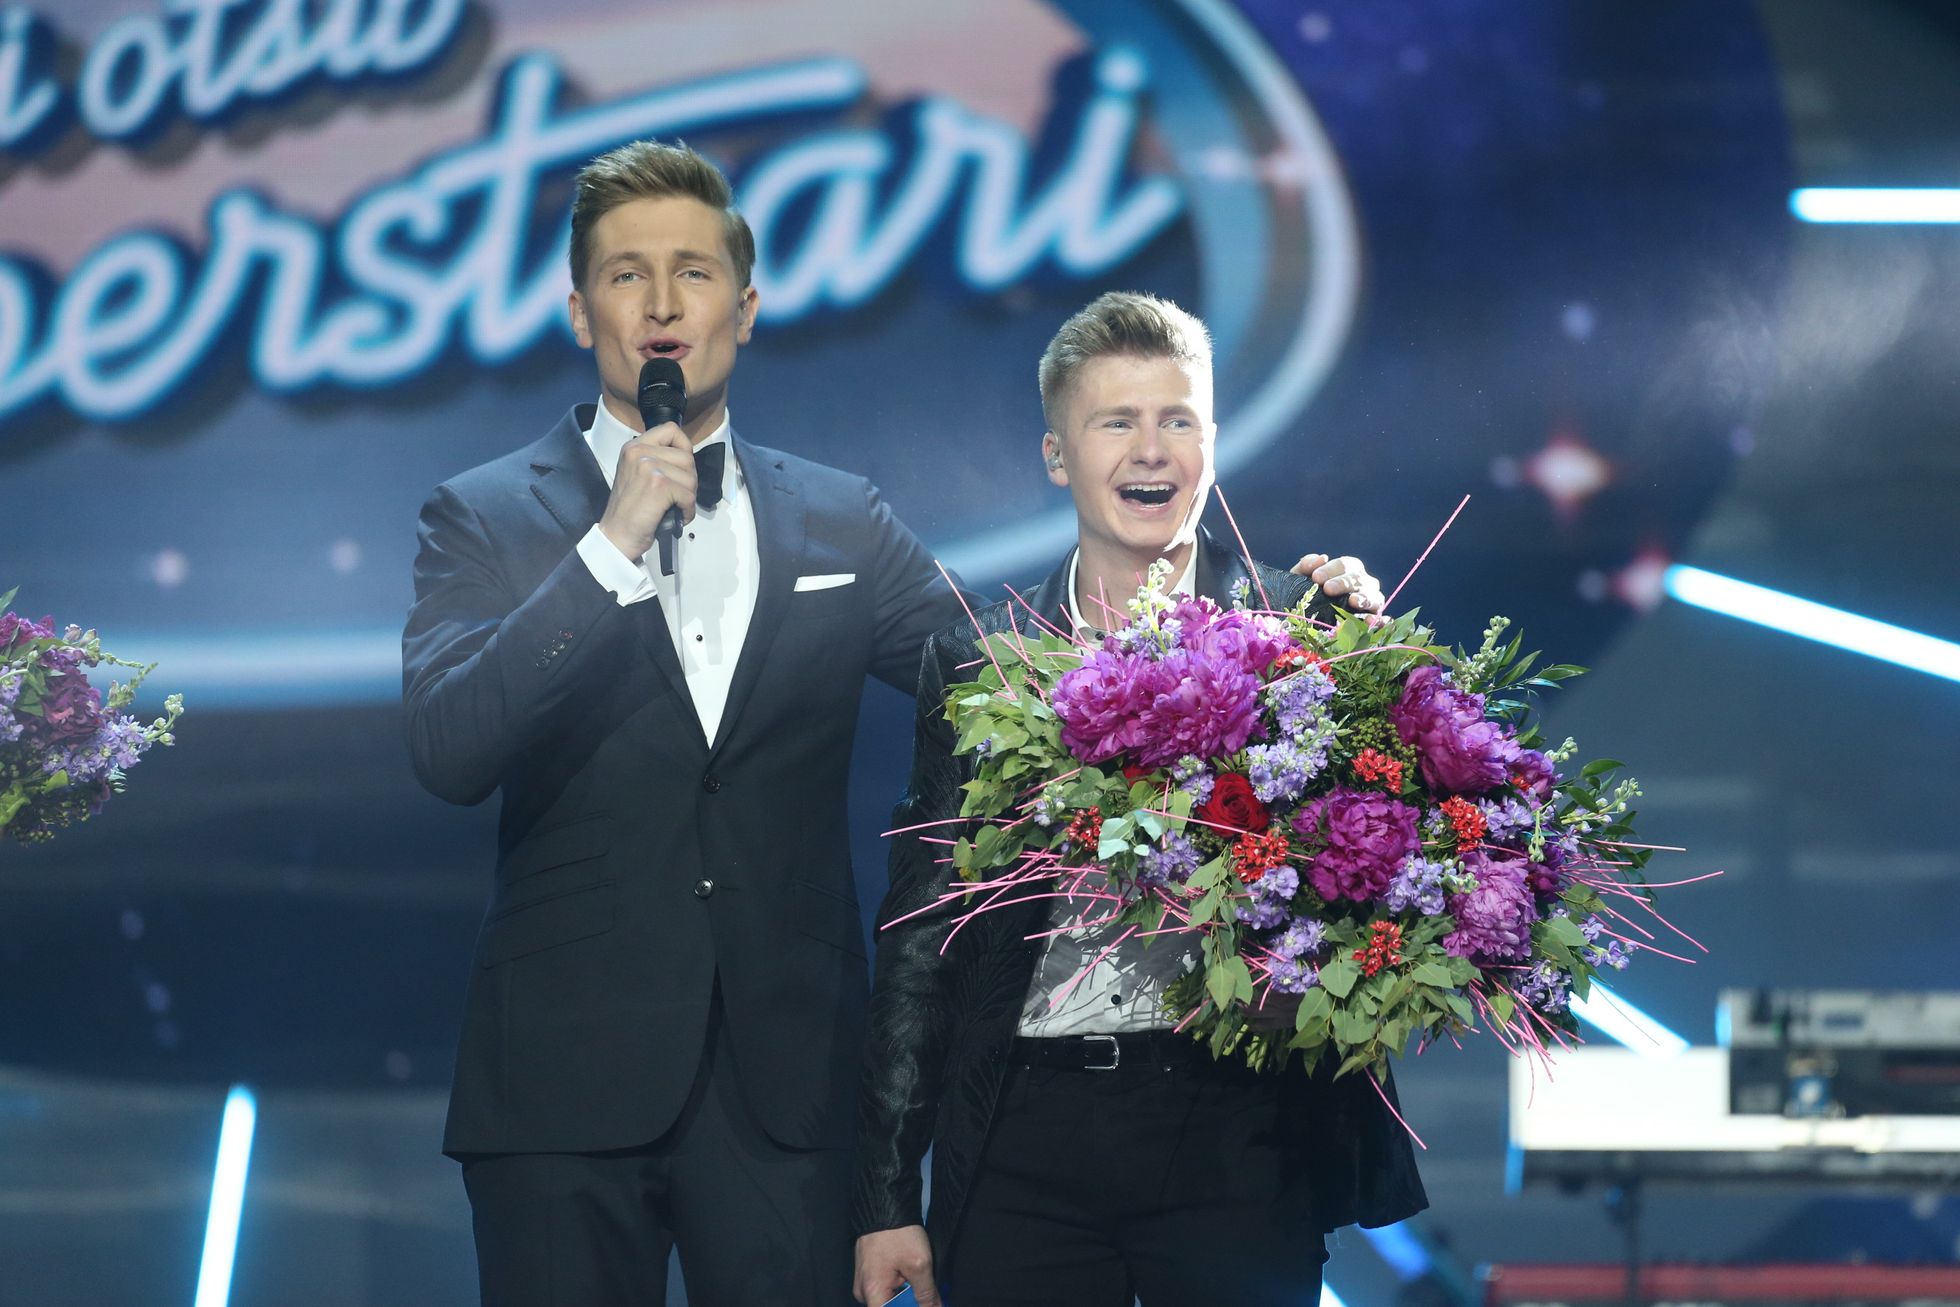 Eesti otsib superstaari 2018 finaalshow